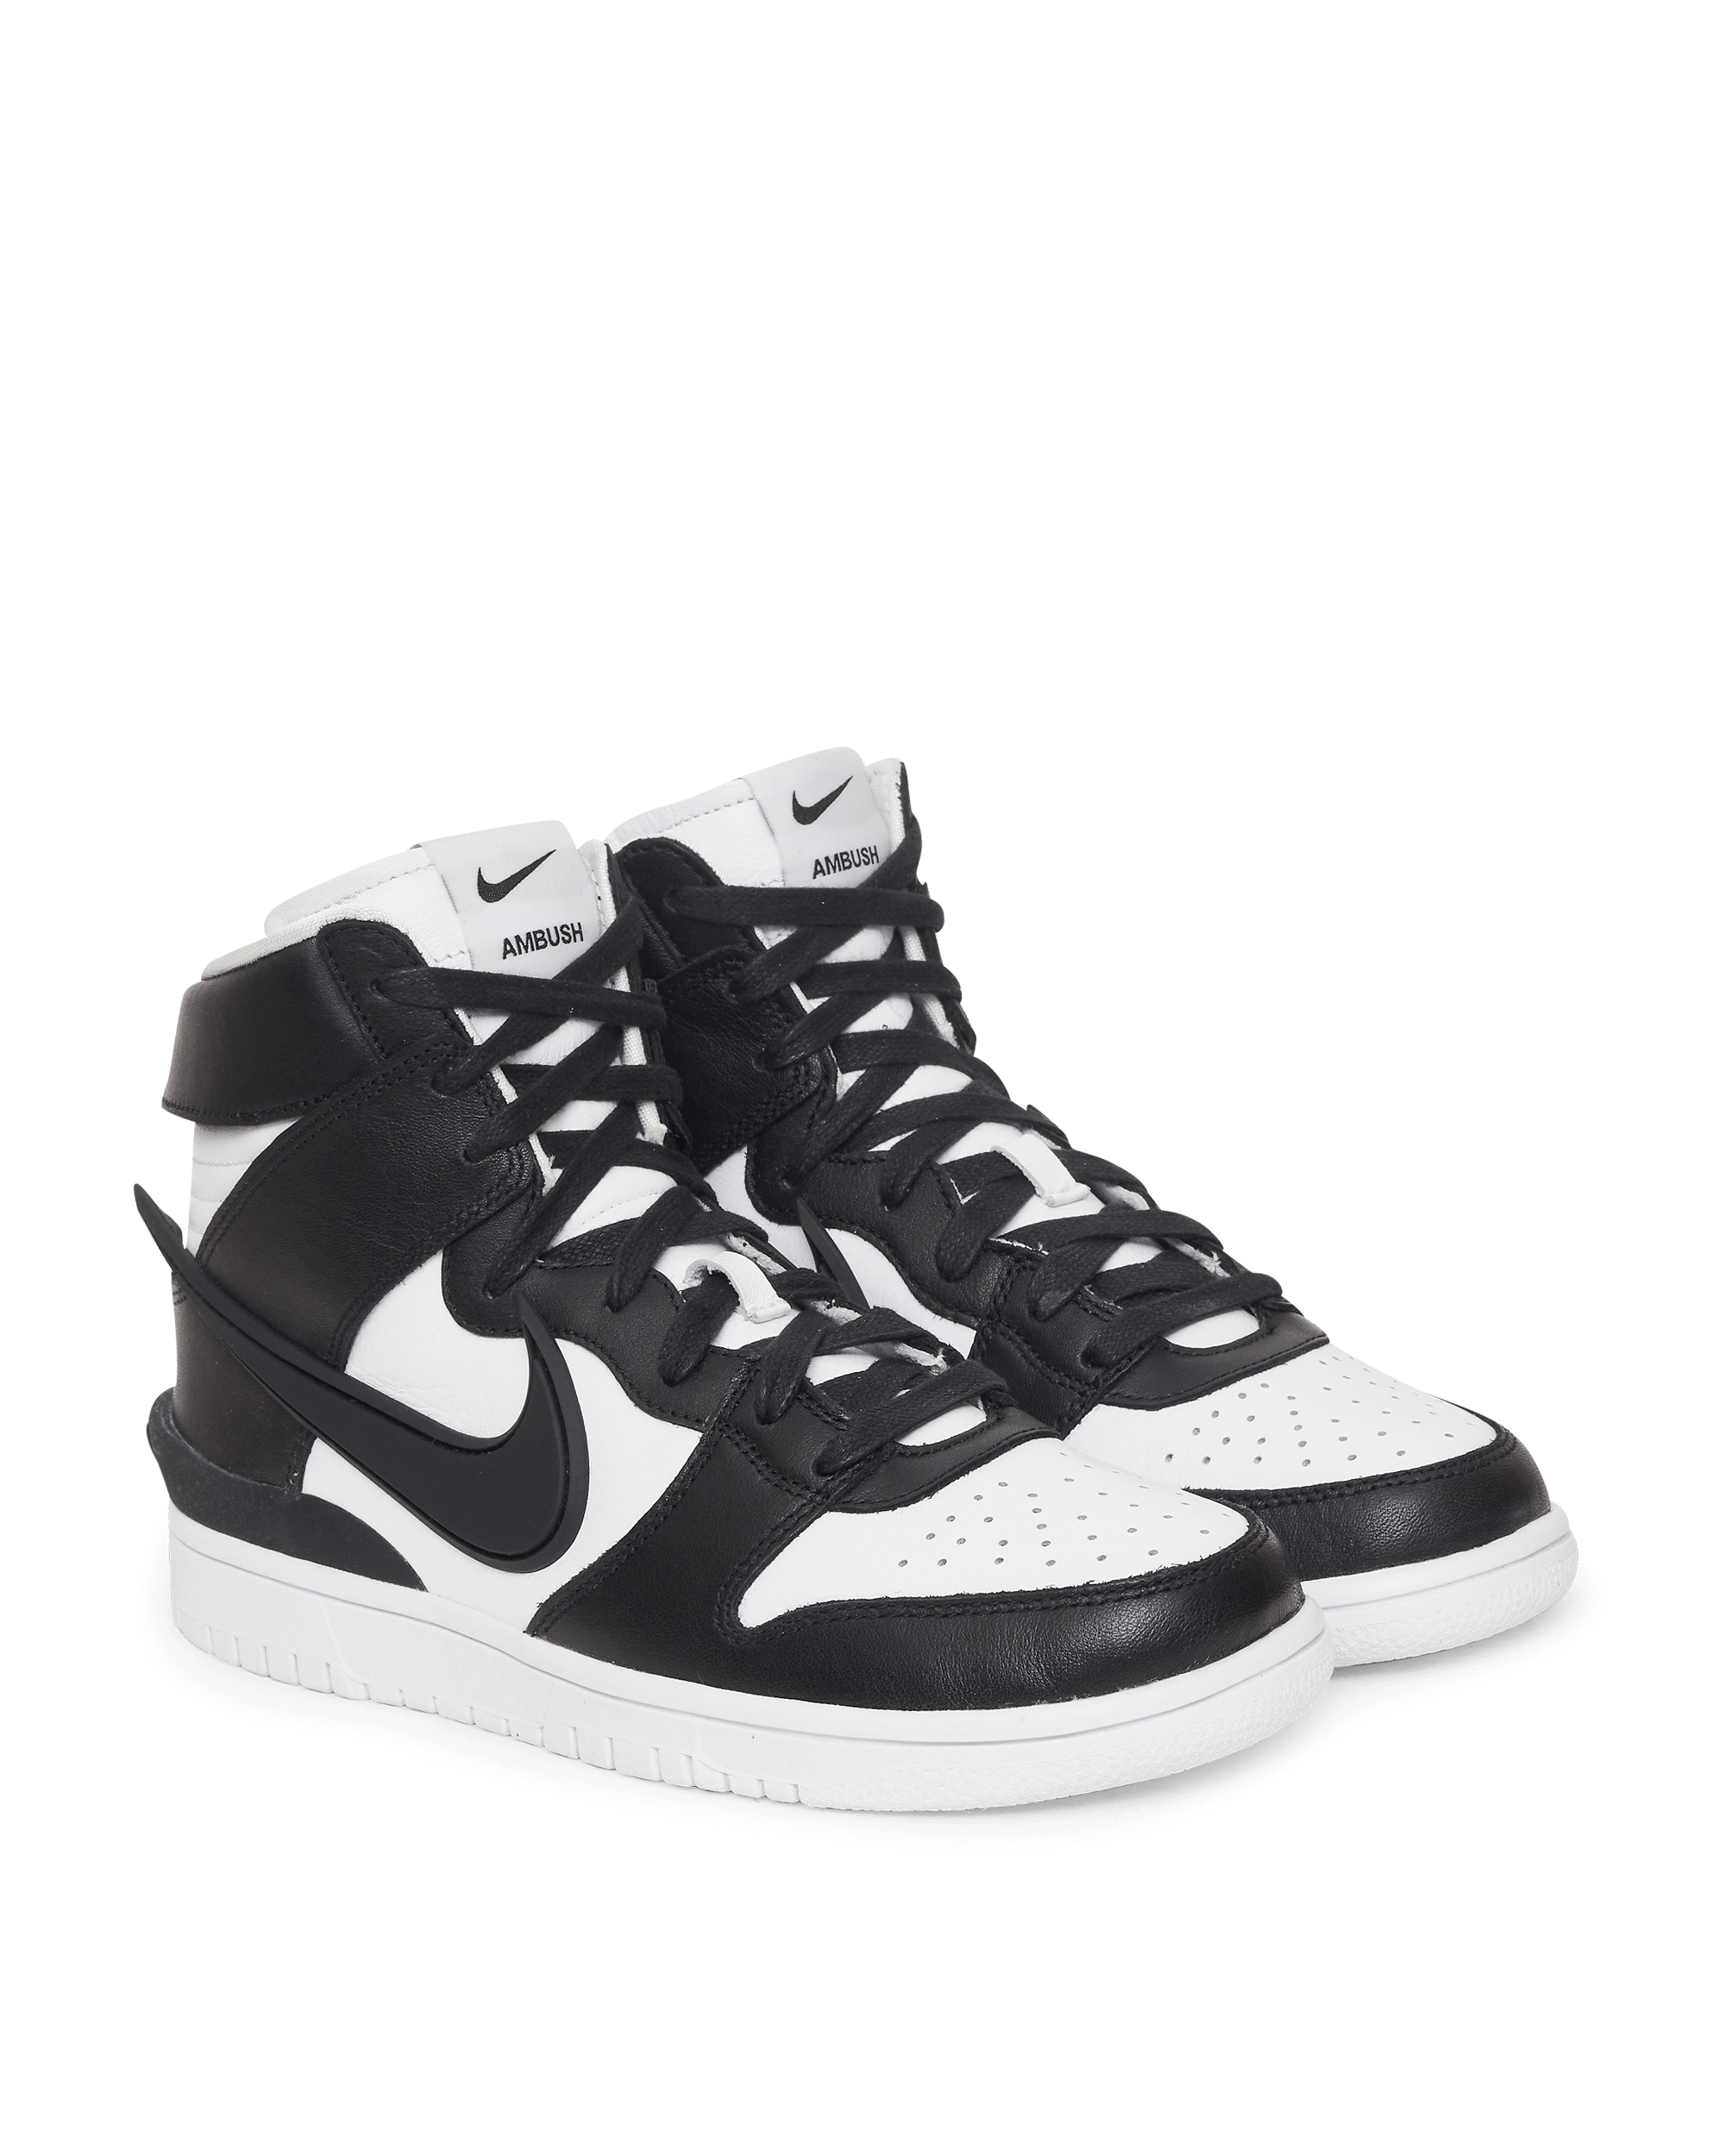 Nike Special Project Dunk Hi / Ambush BLACK/WHITE Sneakers High CU7544-001